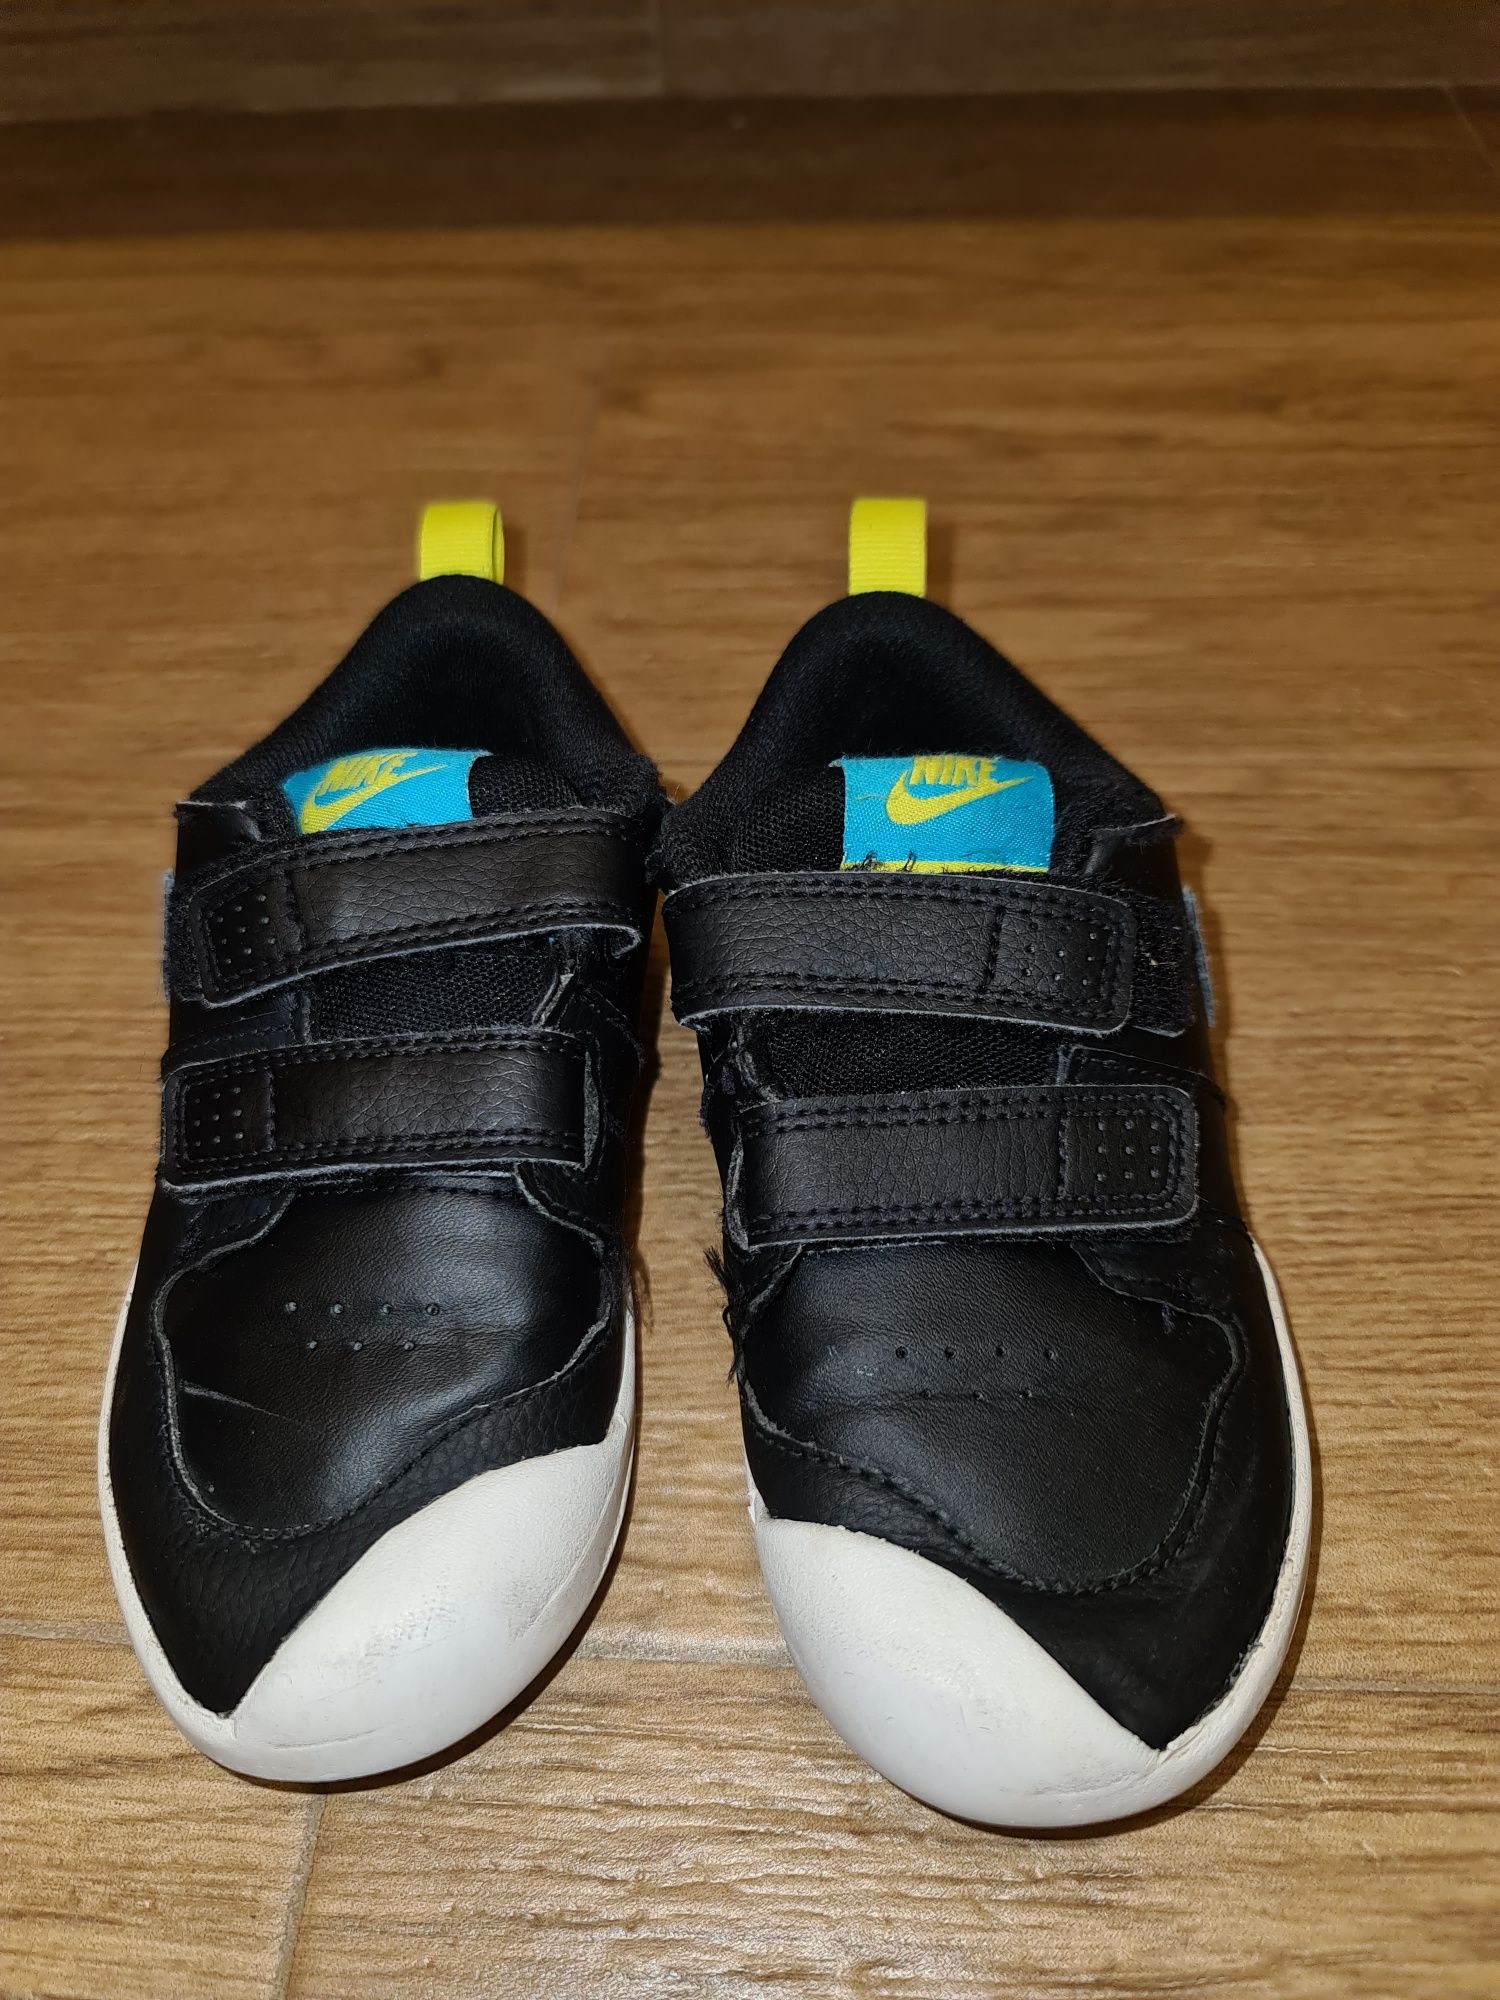 Adidasi Nike copii marime 27, 16 cm